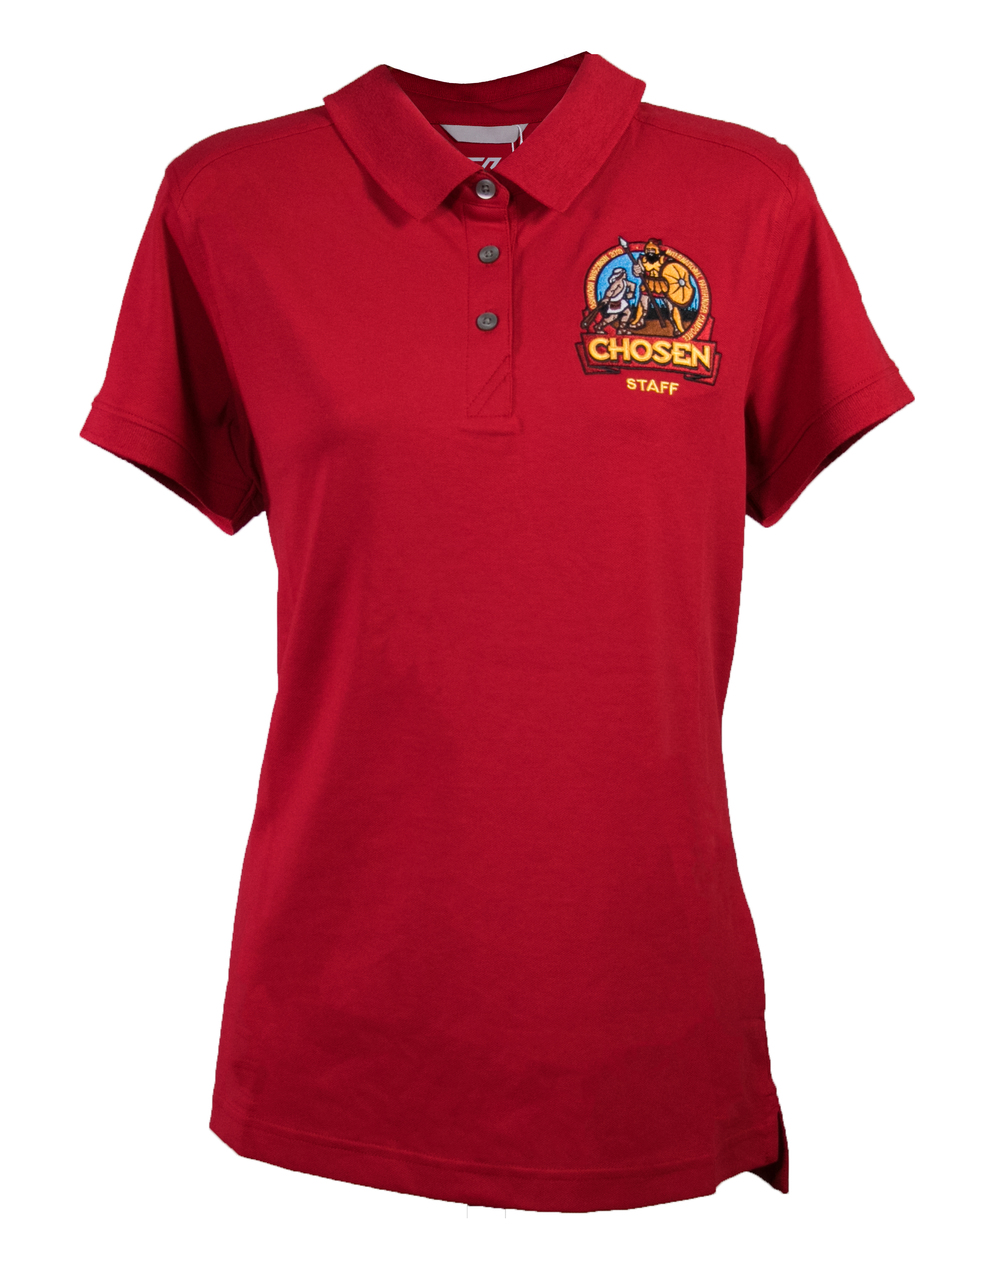 Camisa roja deportiva para damas | Chosen (para el personal)